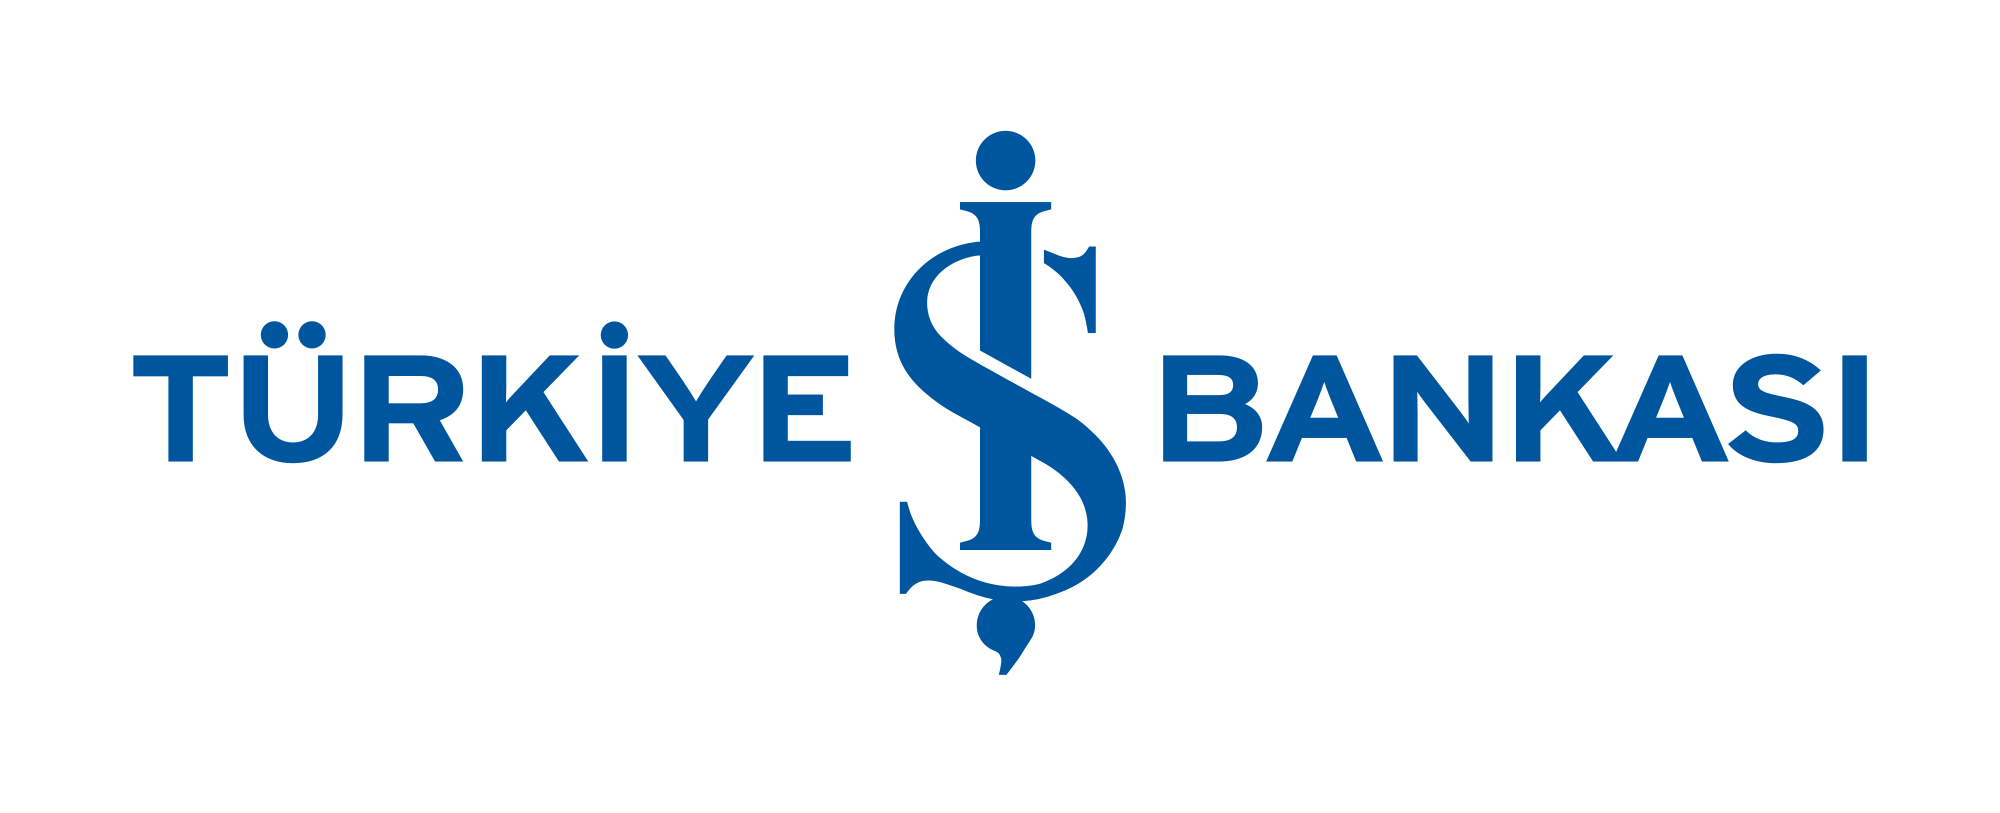 Is Bank Brand Logo